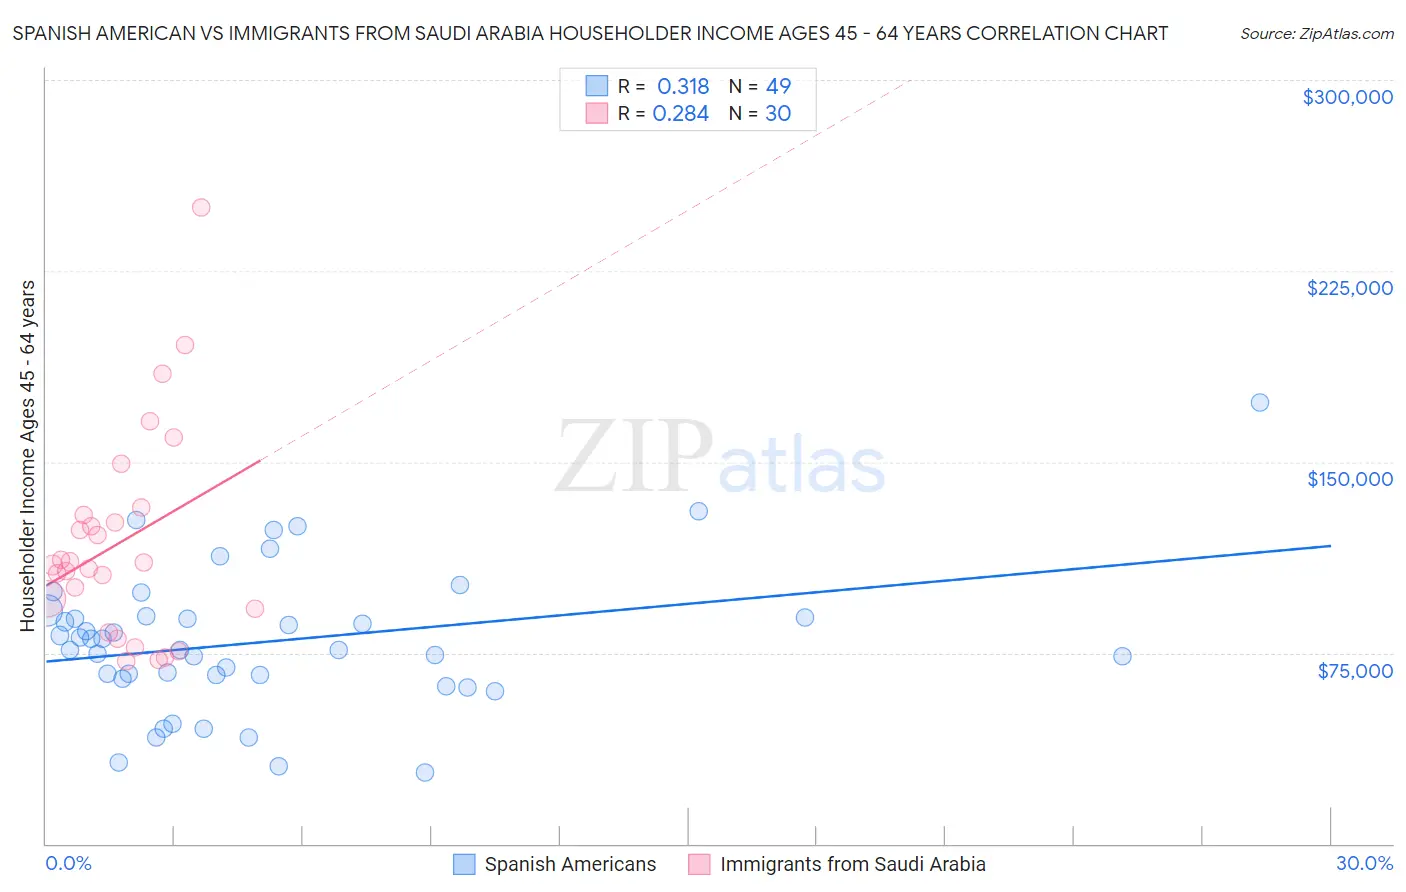 Spanish American vs Immigrants from Saudi Arabia Householder Income Ages 45 - 64 years